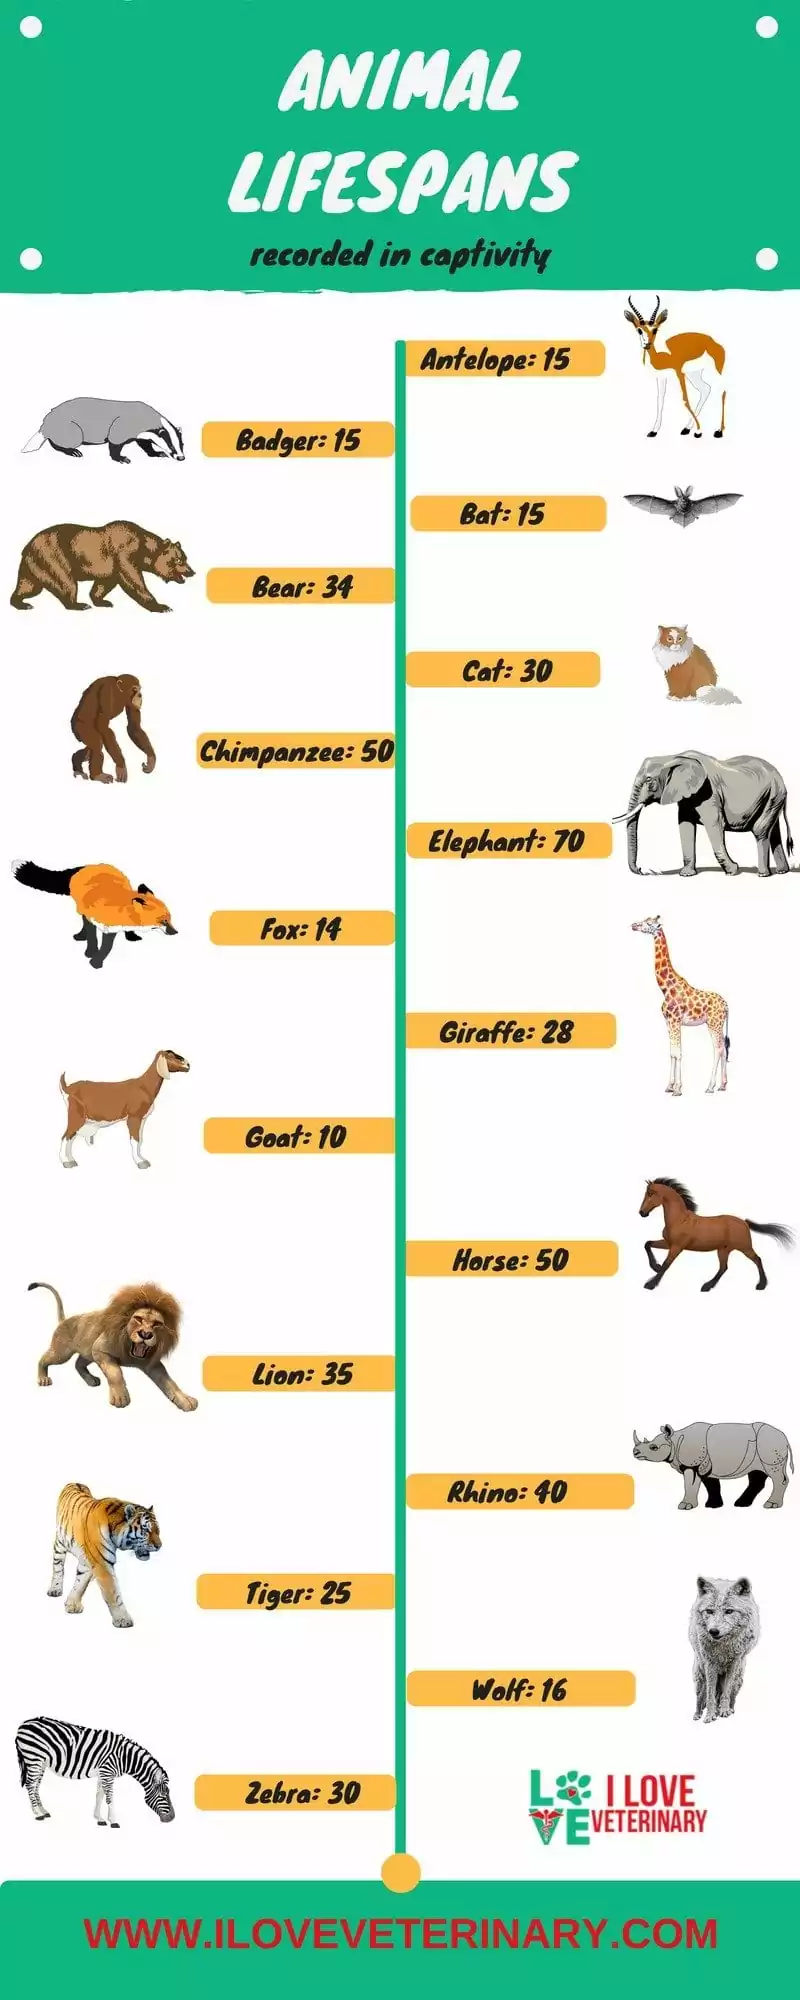 Animal lifespans infographic